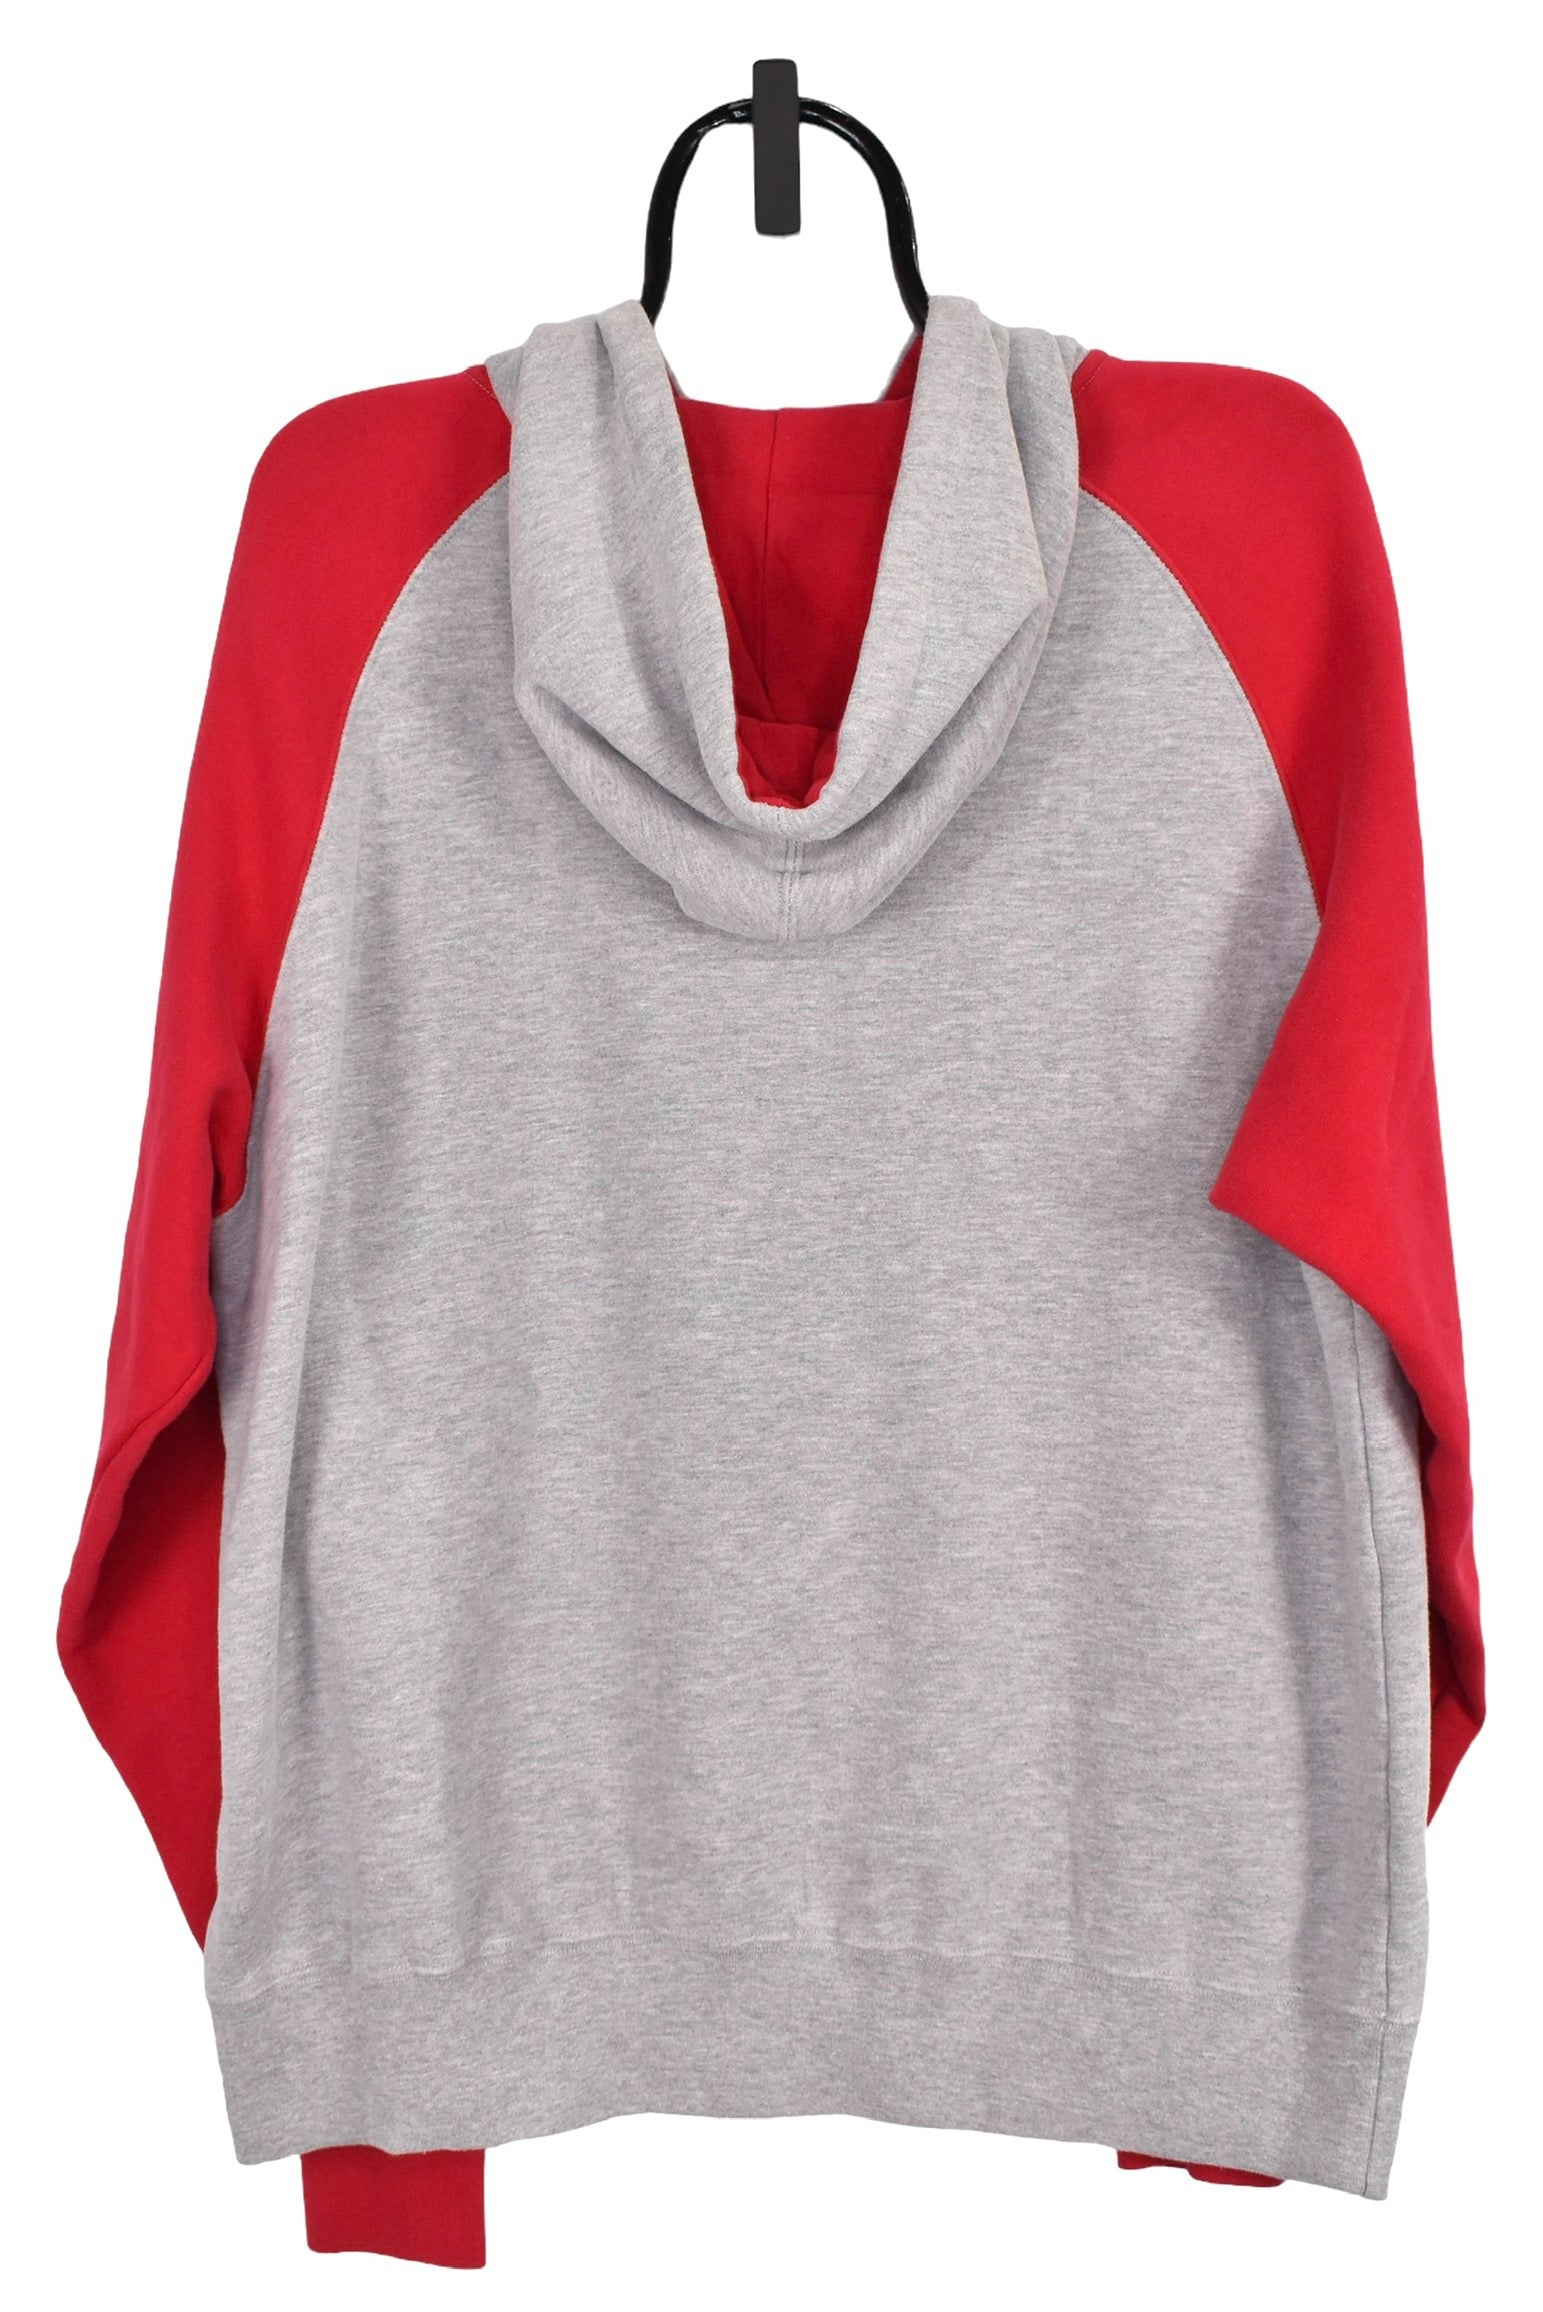 Vintage Boston Red Sox hoodie (XL), grey MLB embroidered sweatshirt